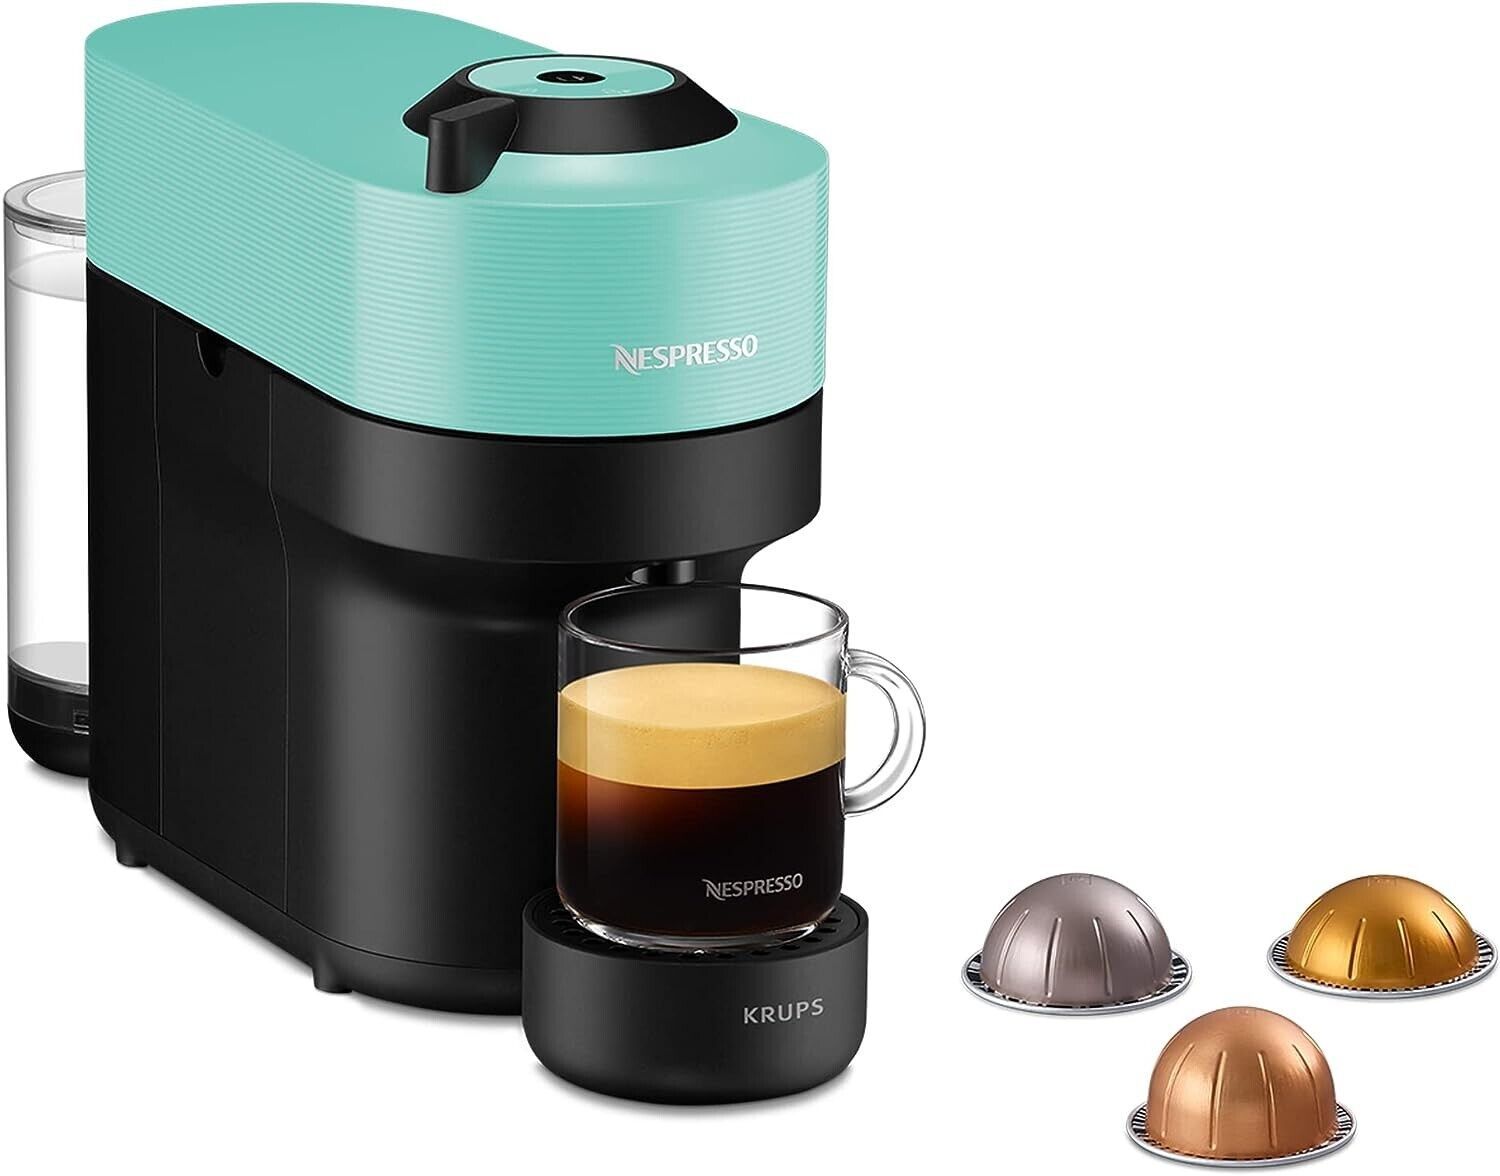 Primary image for Nespresso VERTUO Pop - Capsule coffee maker, Krups espresso machine, 4 cup sizes